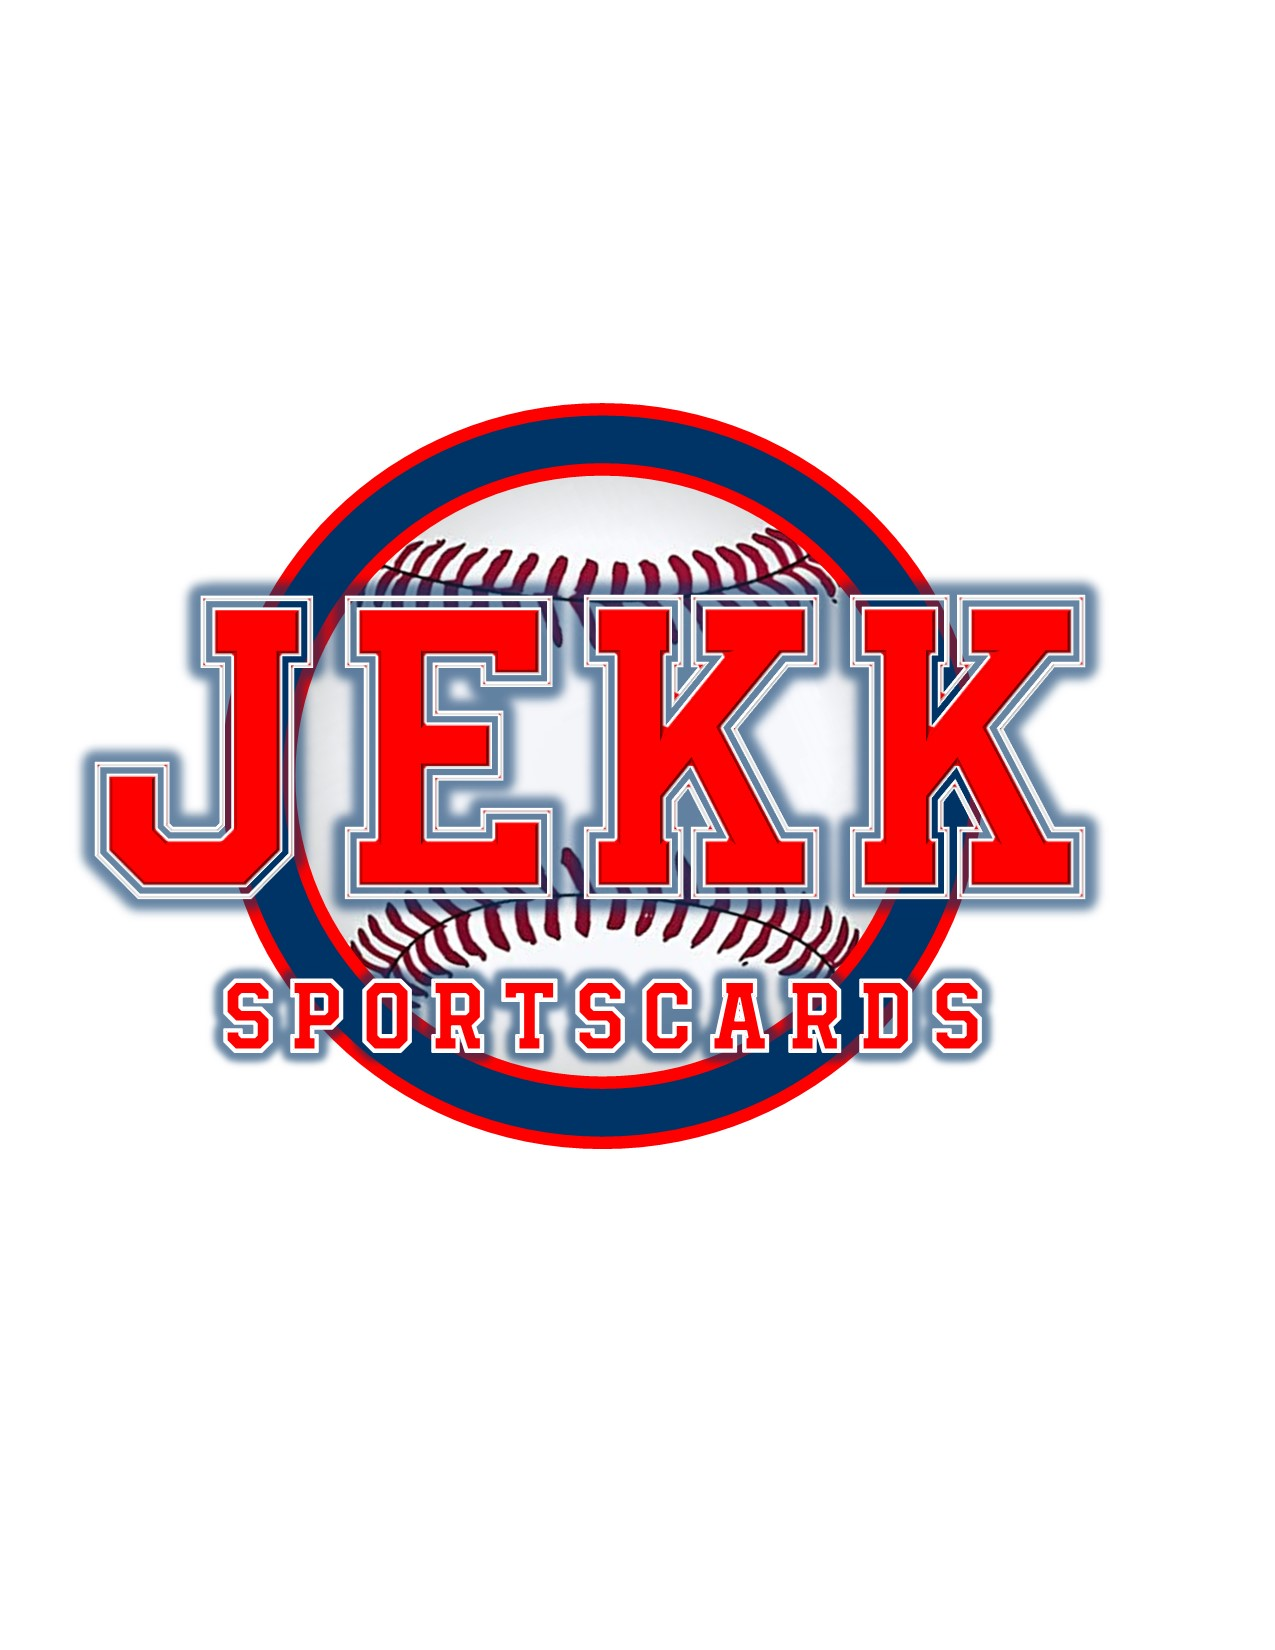 JEKK Sportscards